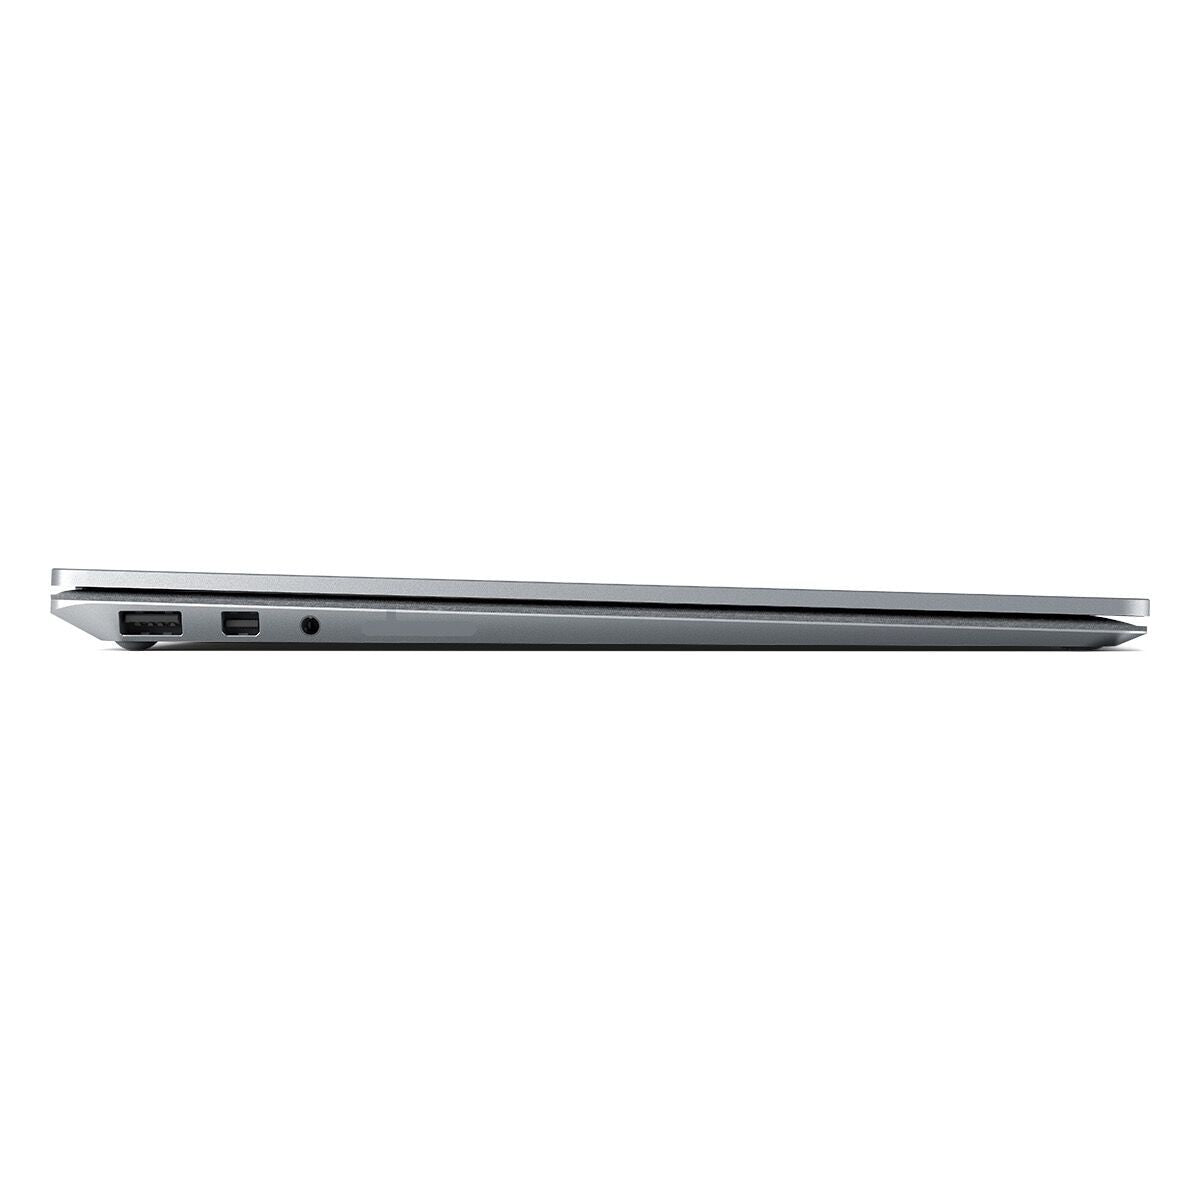 Microsoft Surface Laptop 2 Core i5 8GB 256GB - Platinum - LQN-00001